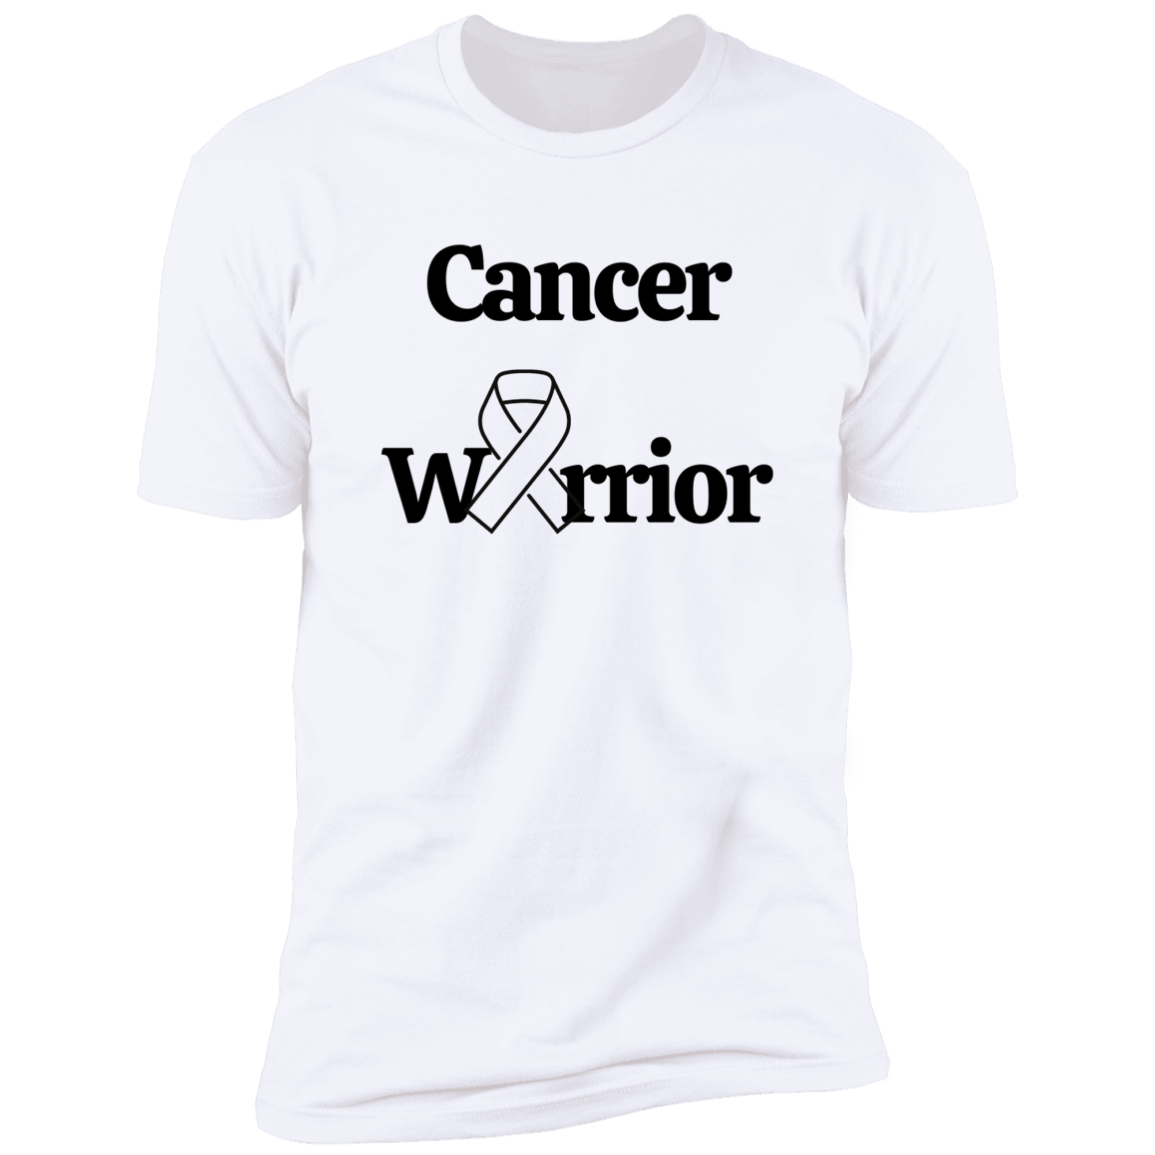 Cancer Warrior Tee